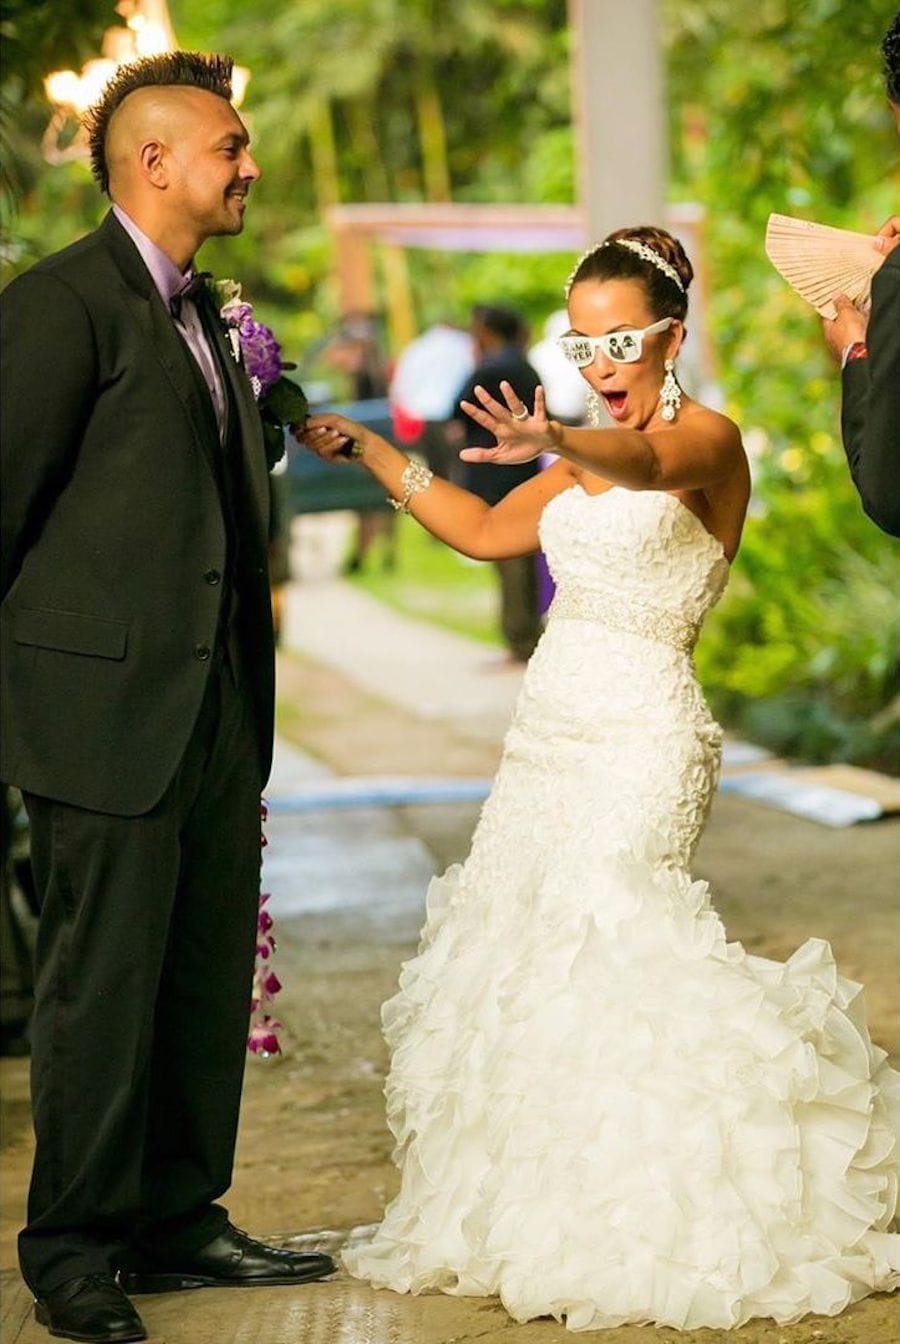 Sean Paul's Wife Jinx Shares Funny Wedding Photo To Celebrate 8th Weddig Anniversary